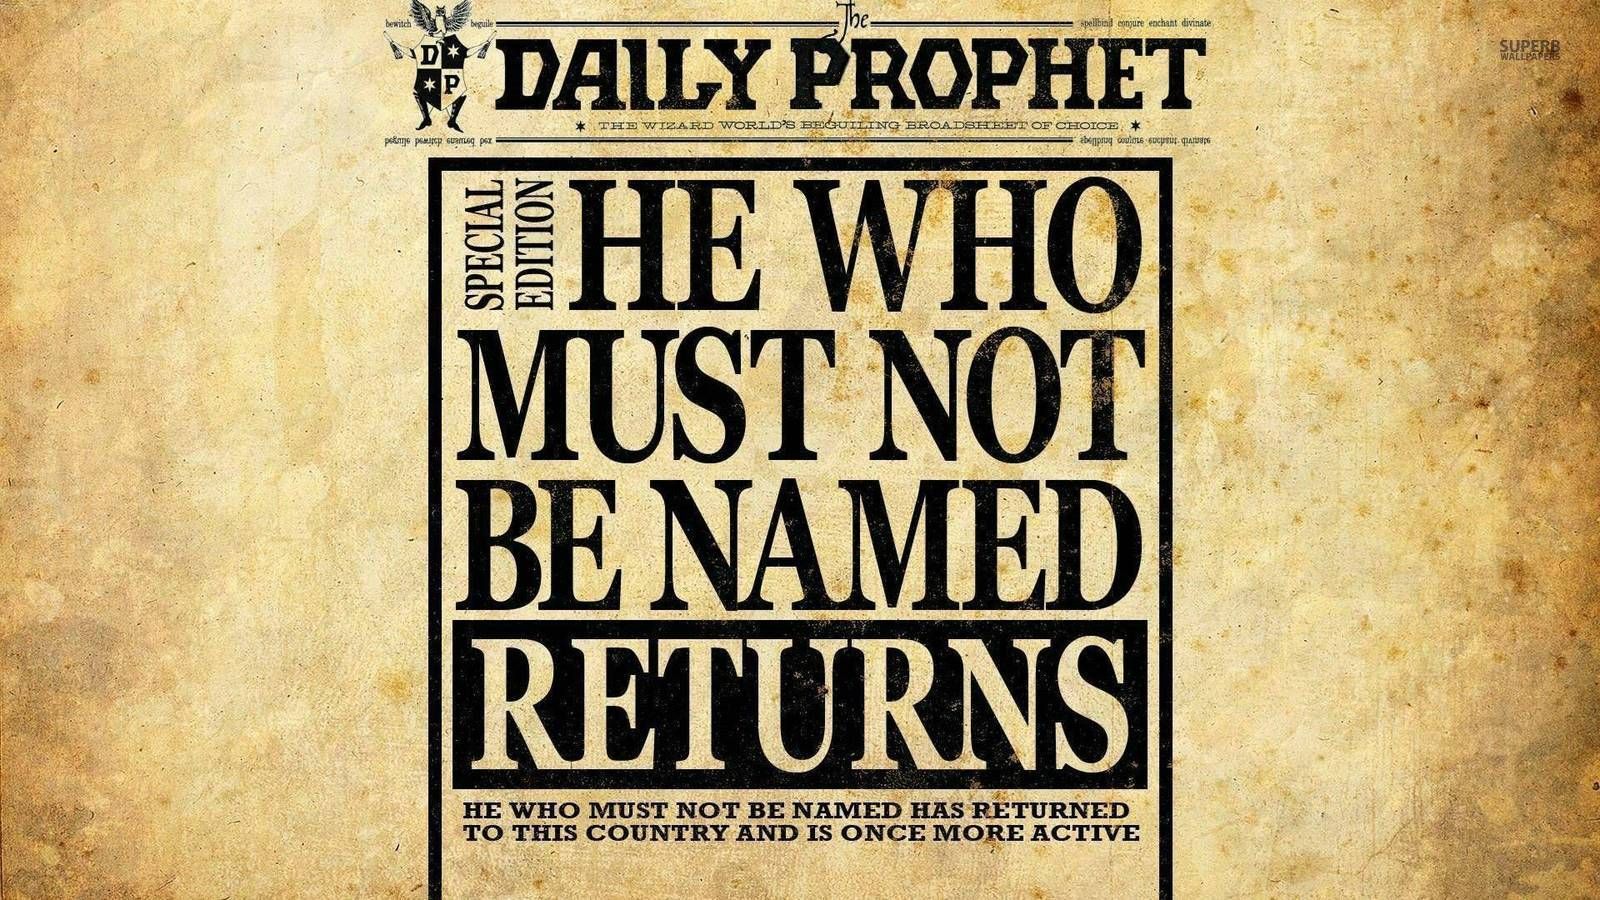 Harry Potter Wallpaper: The Daily Prophet. Harry potter wallpaper, Harry potter wallpaper, Daily prophet